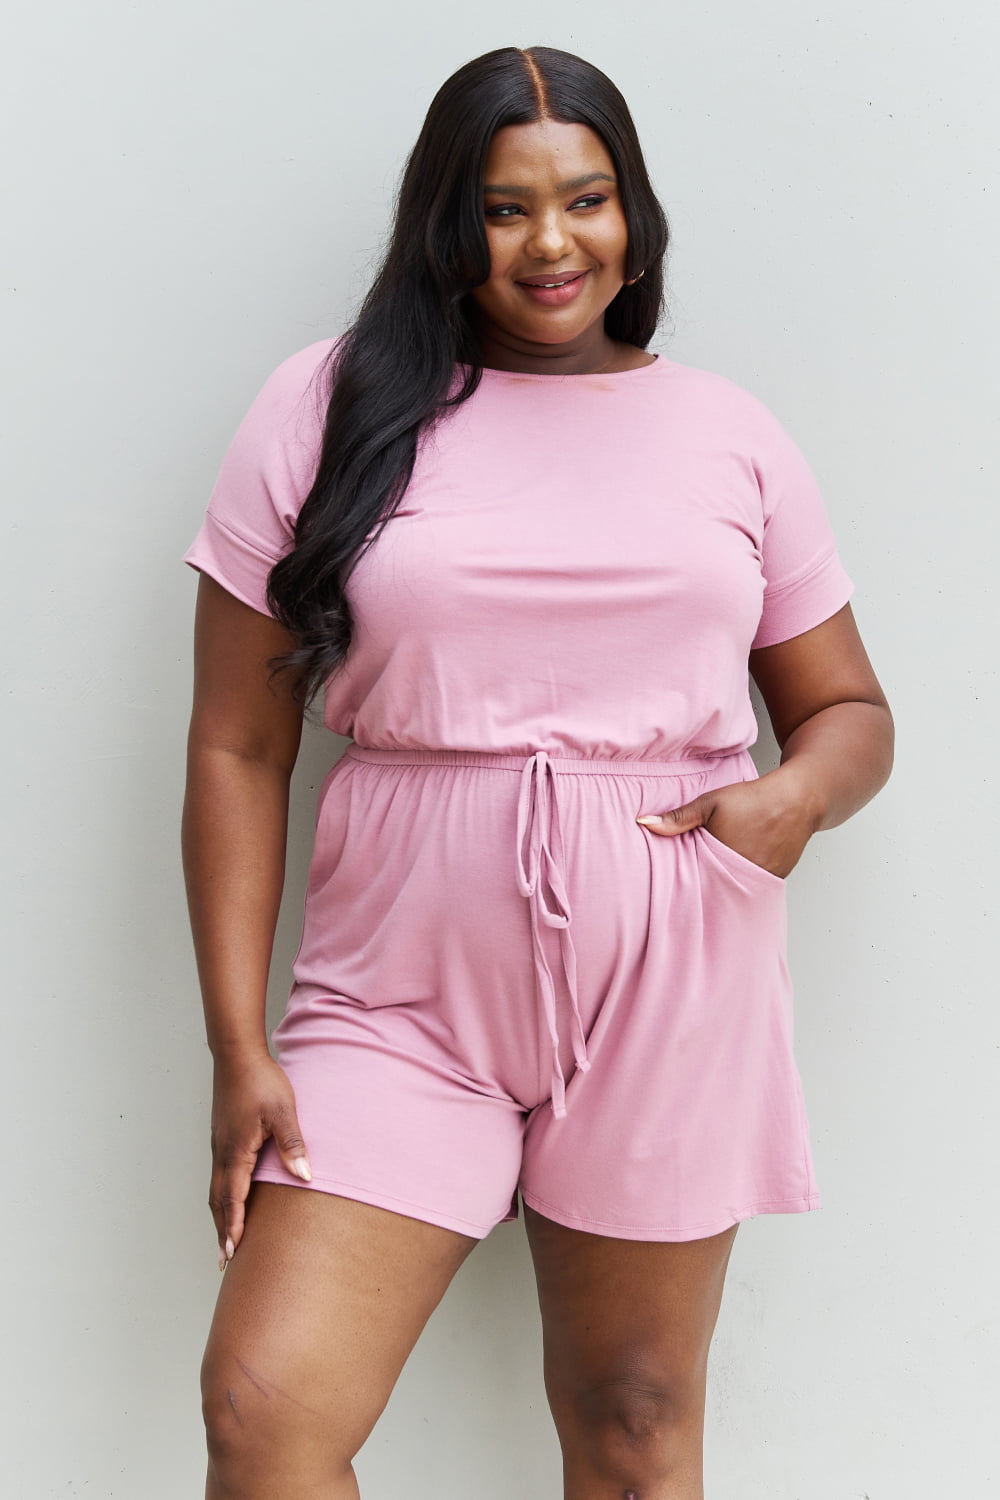 Zenana Chilled Out Full Size Short Sleeve Romper in Light Carnation Pink